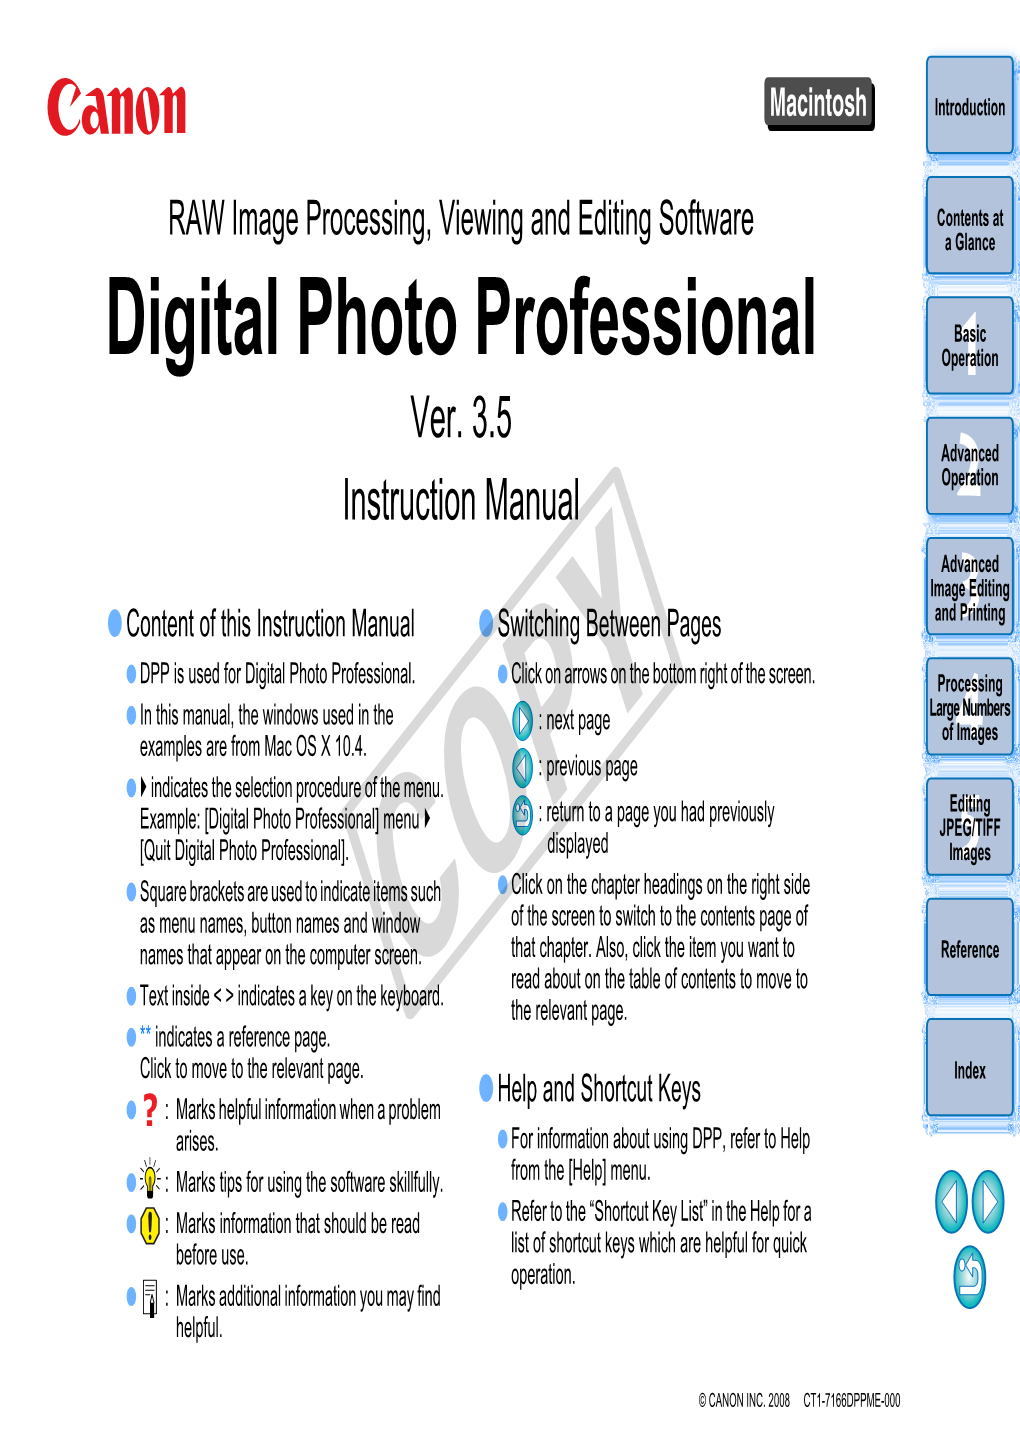 Digital Photo Professional Operation1 Ver